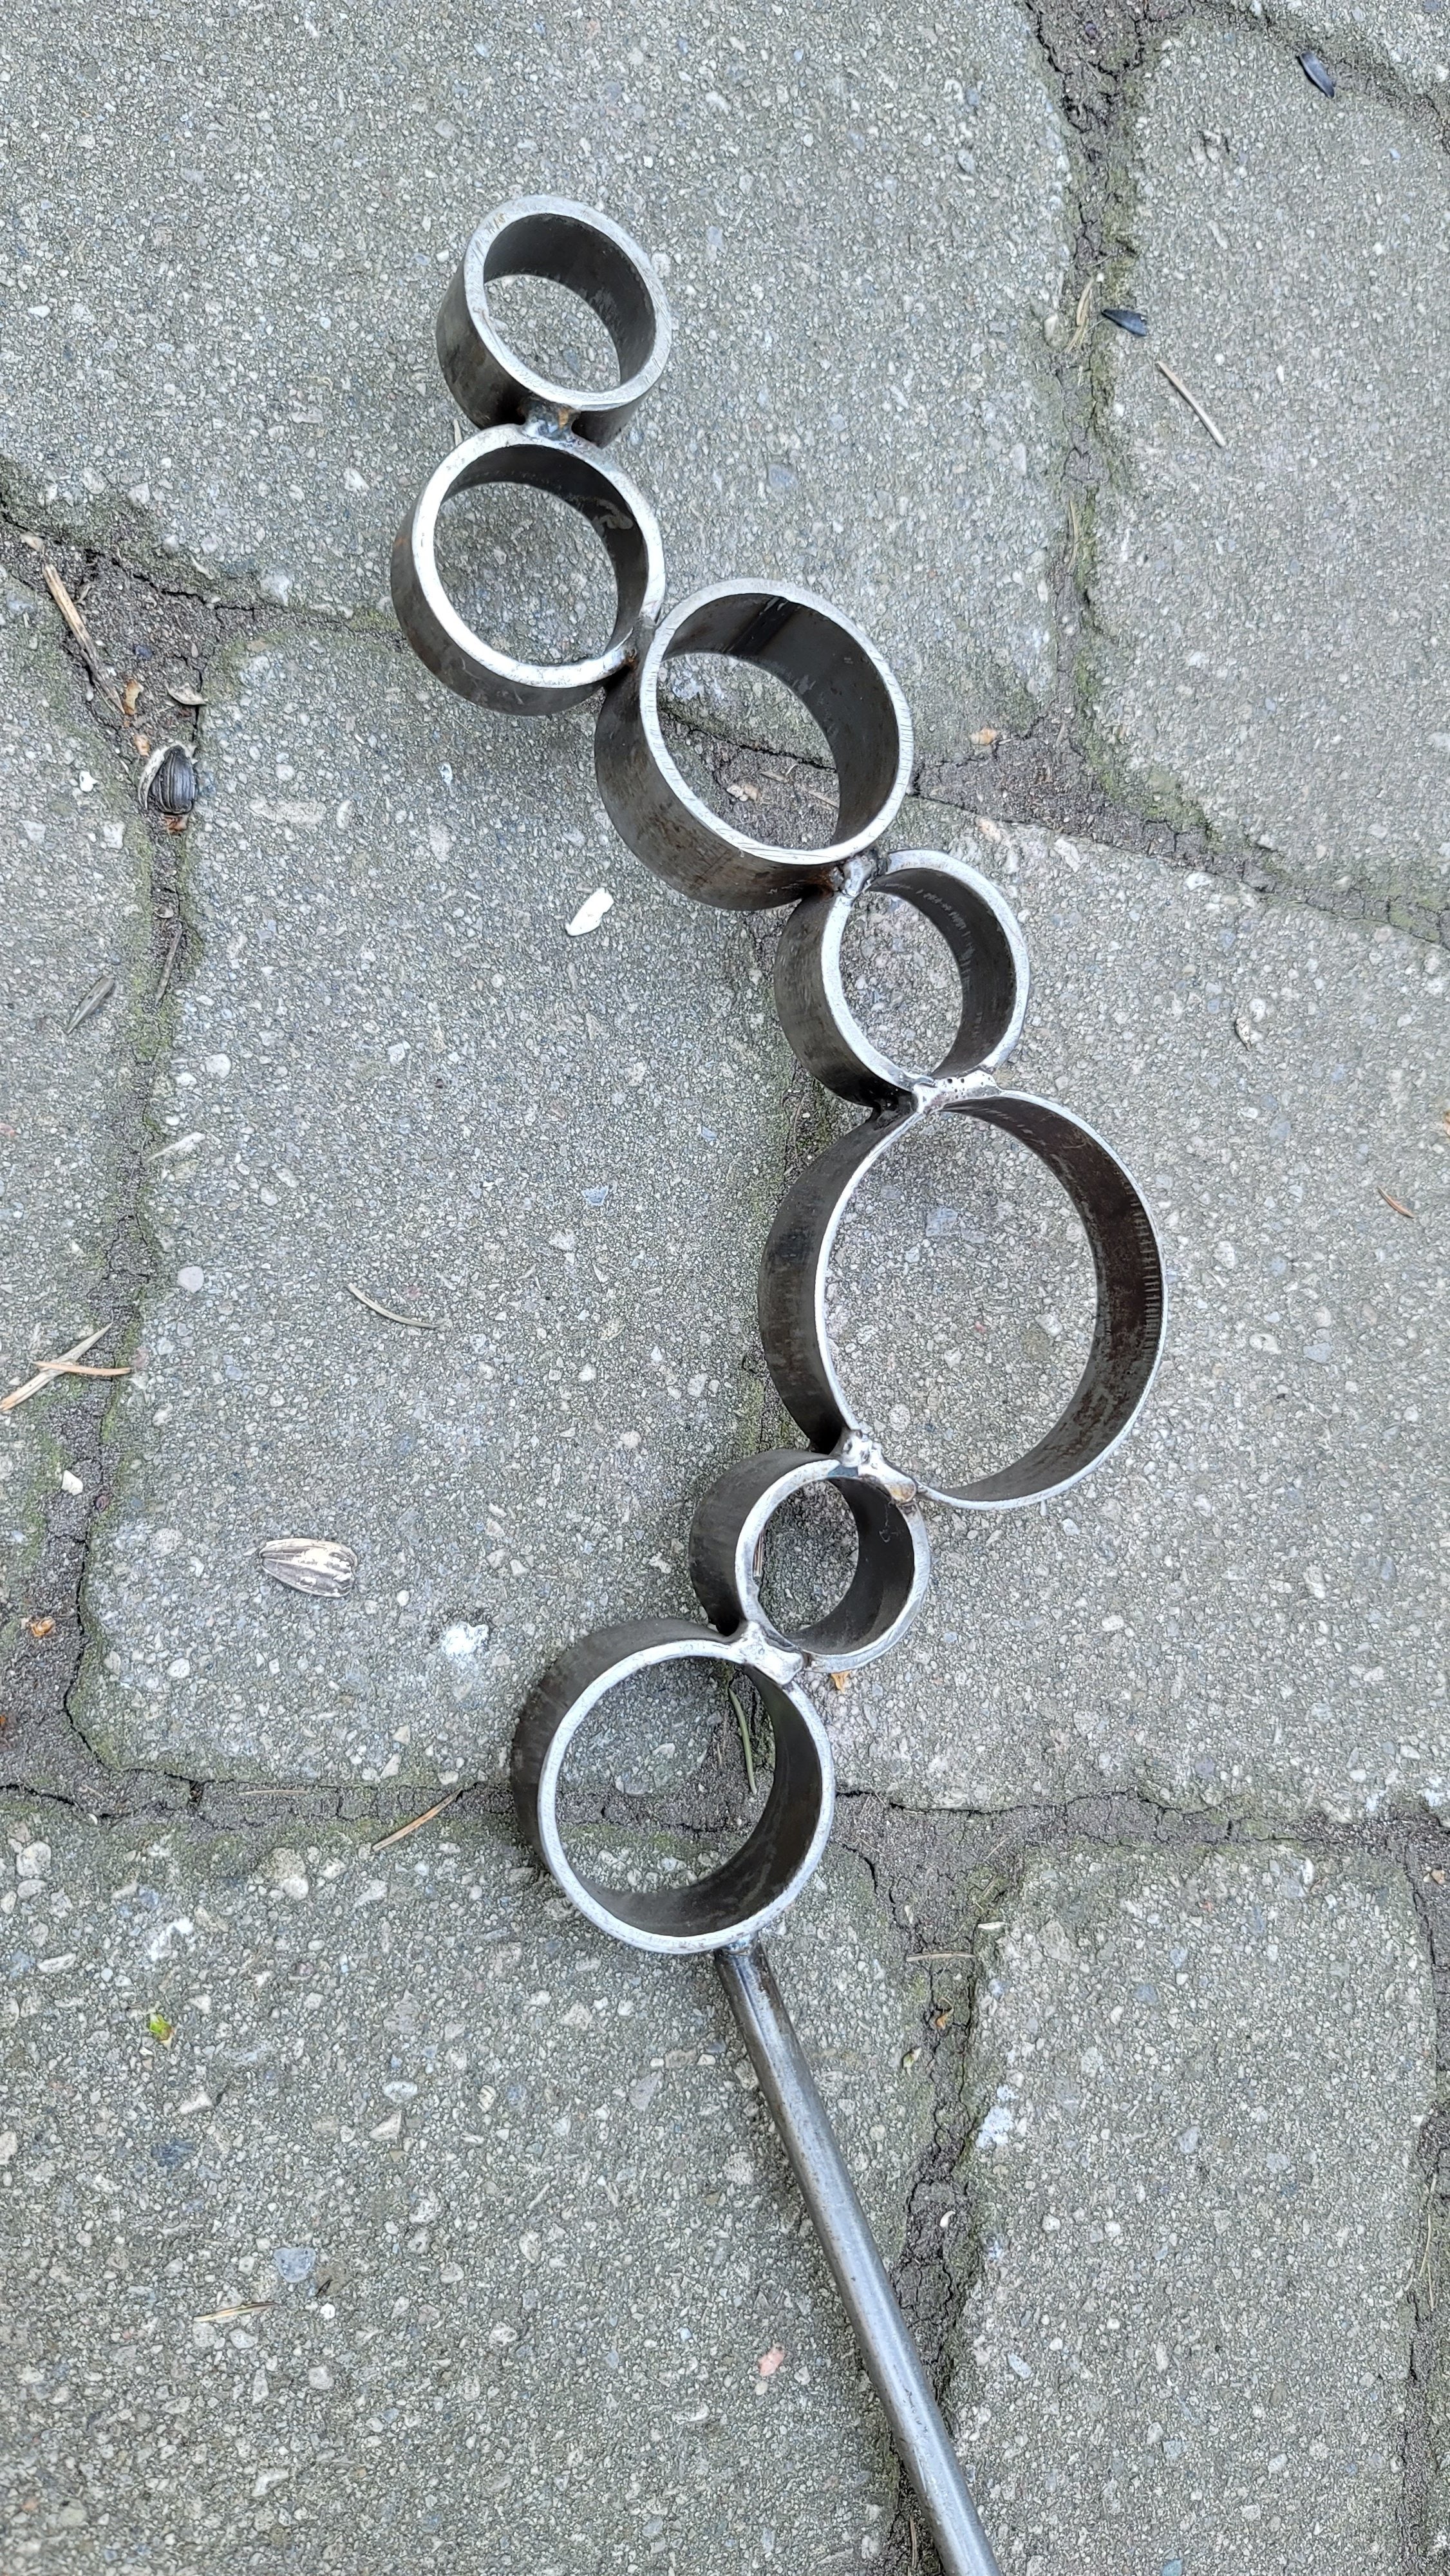 metal circles welded together garden spike